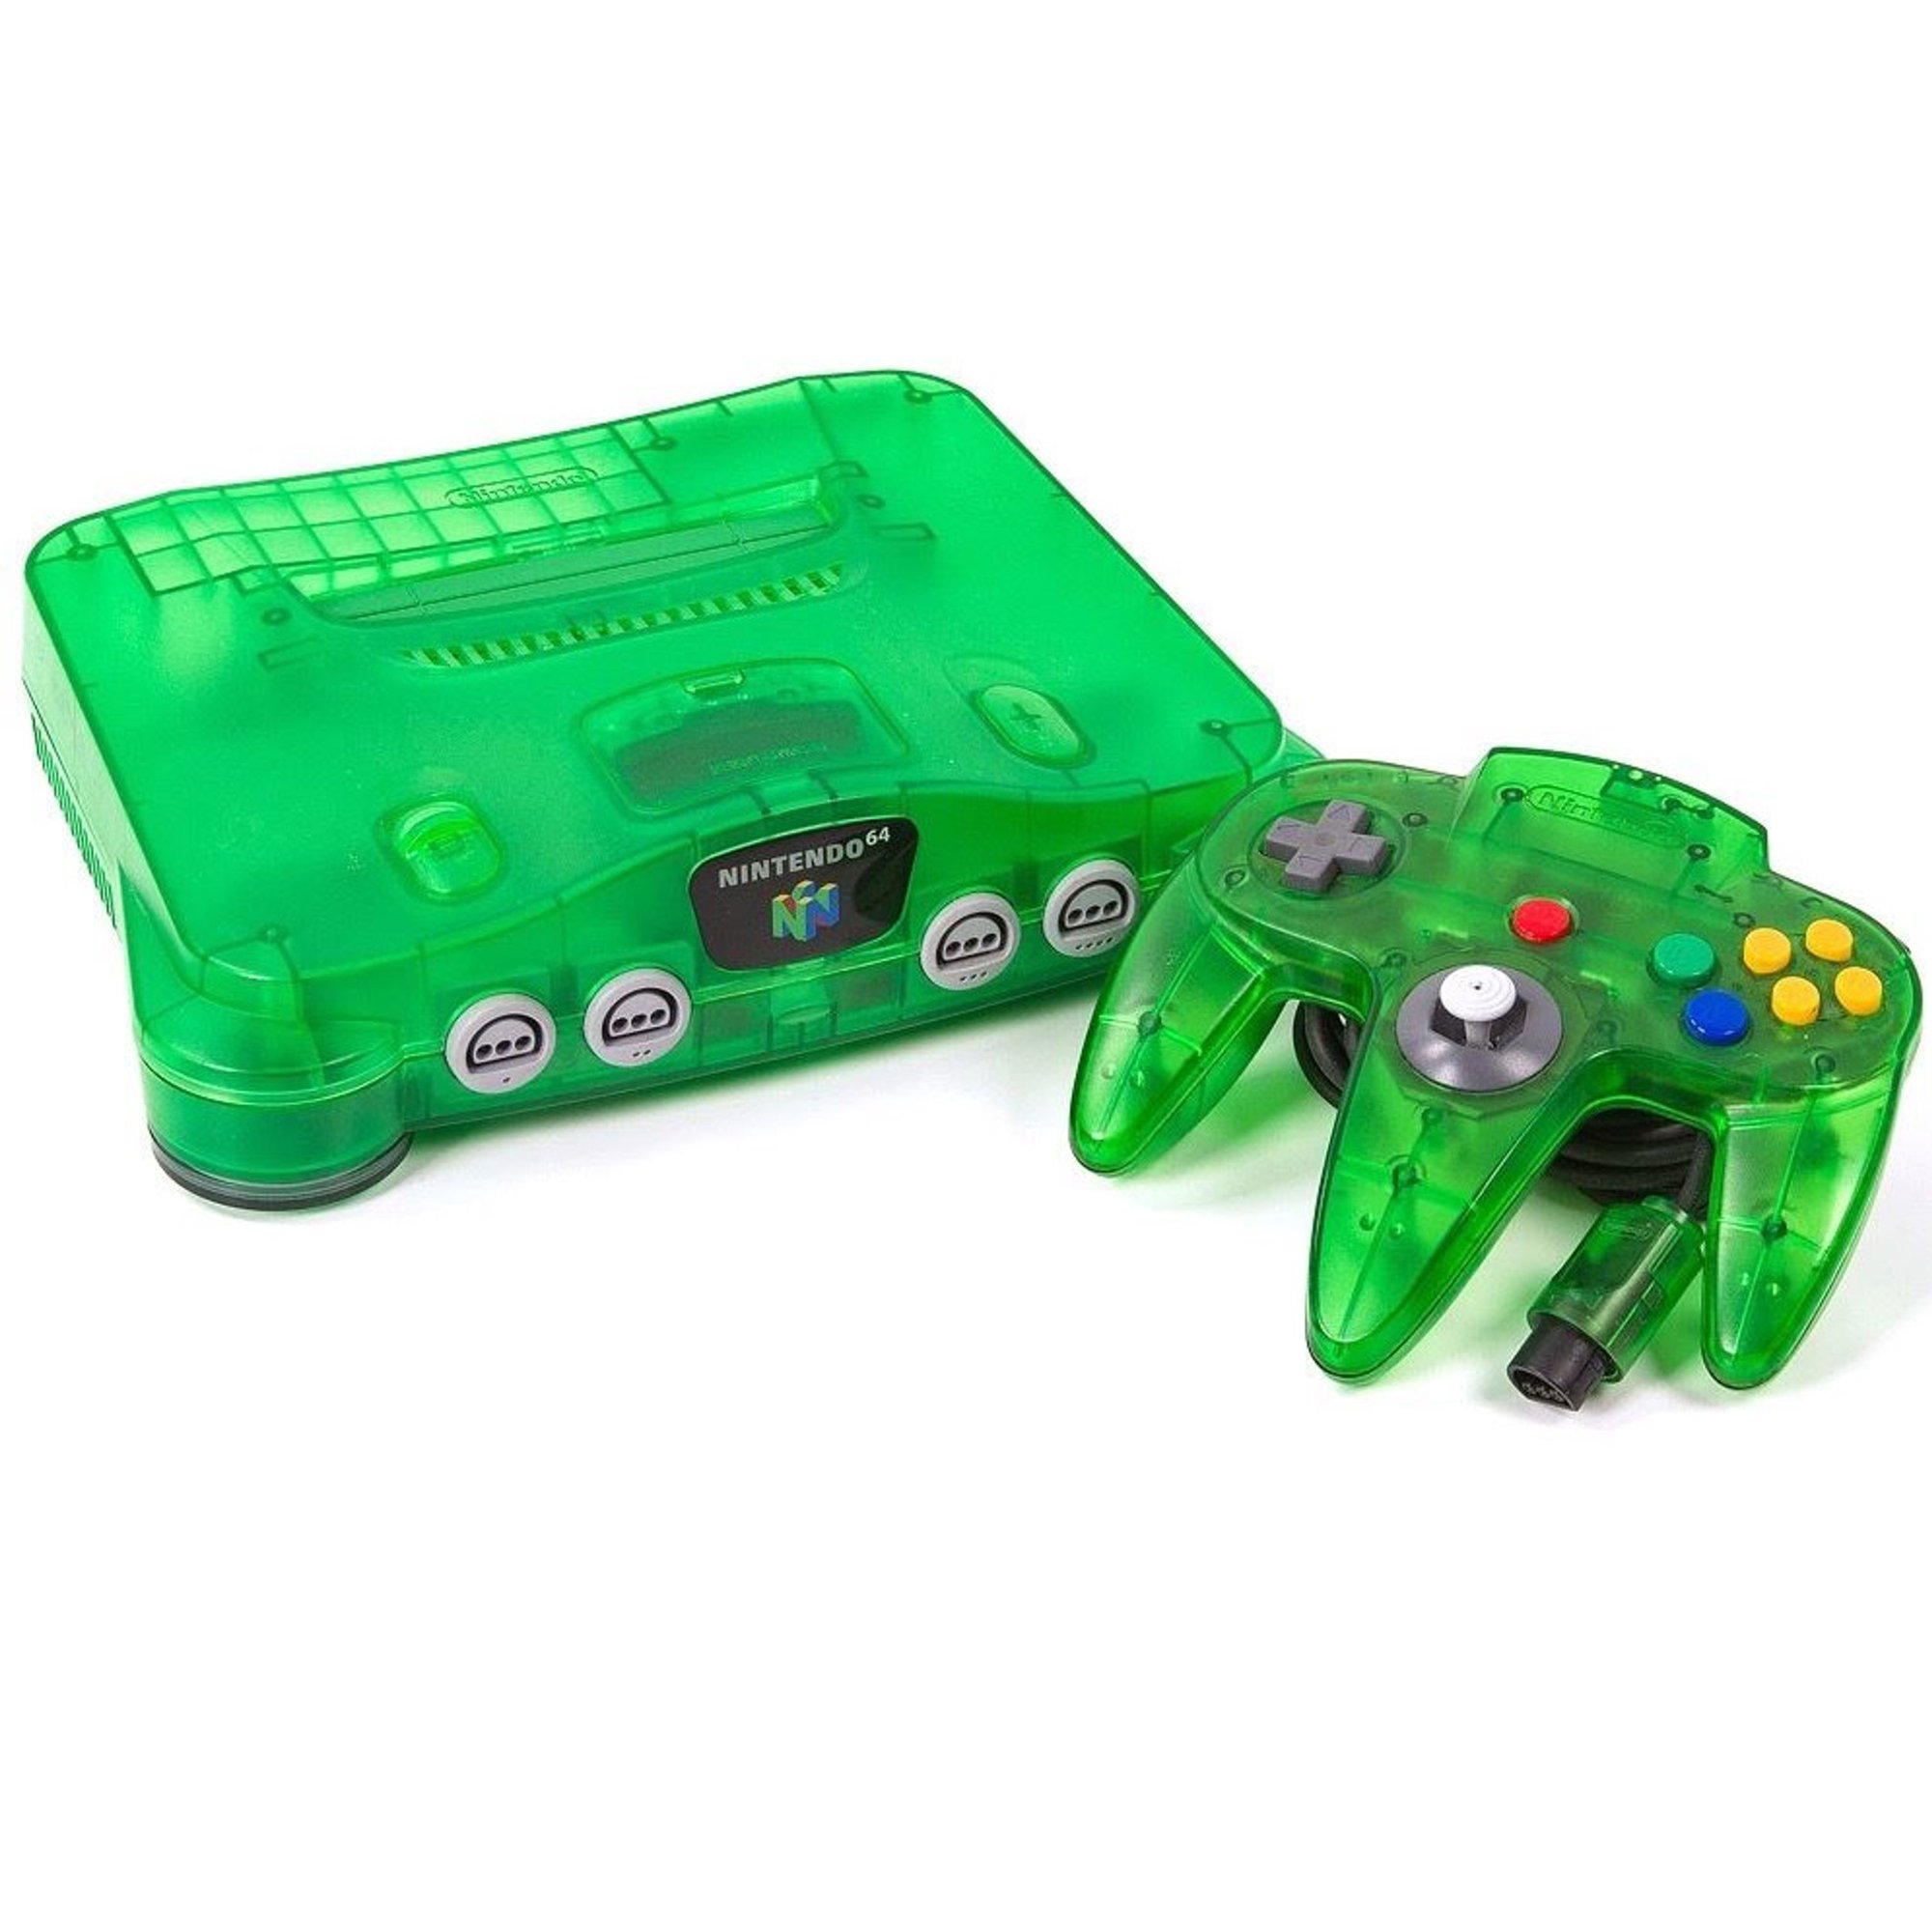 Nintendo 64 Konsole - Jungle-Green